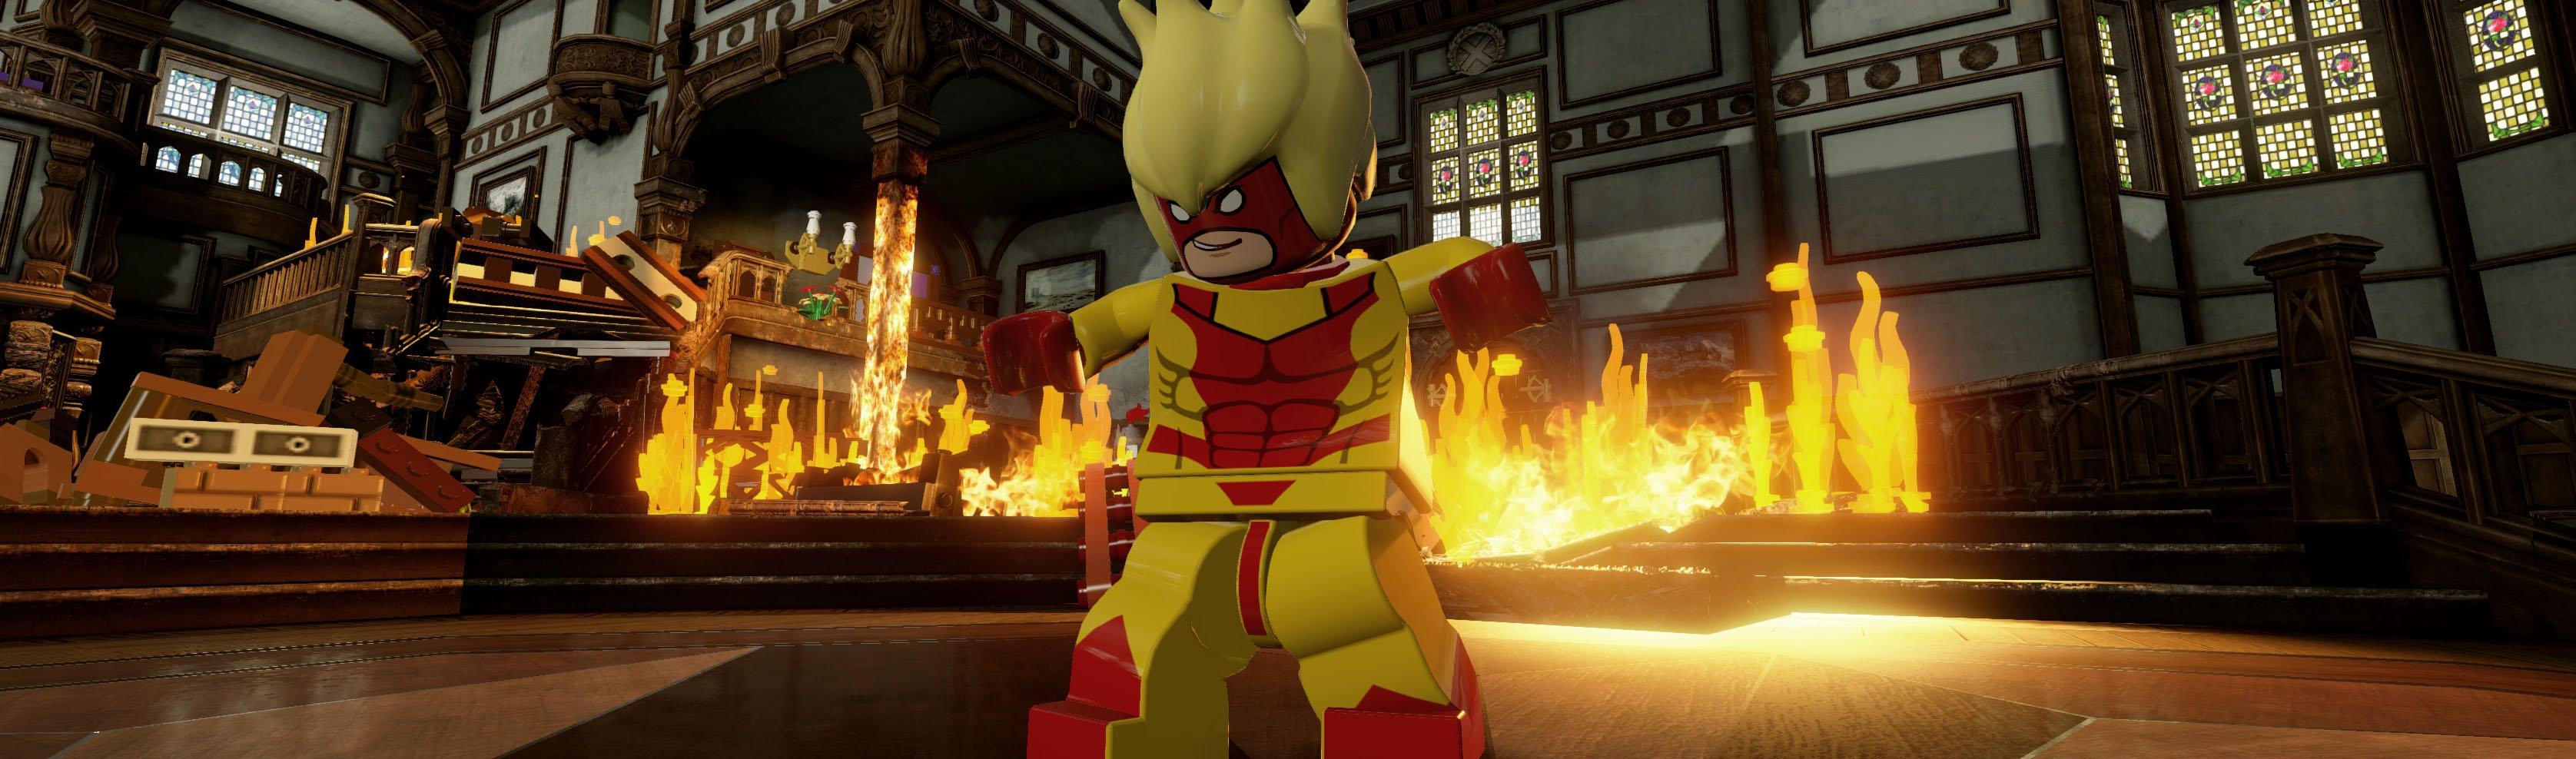 LEGO Marvel Super Heroes - PlayStation 3